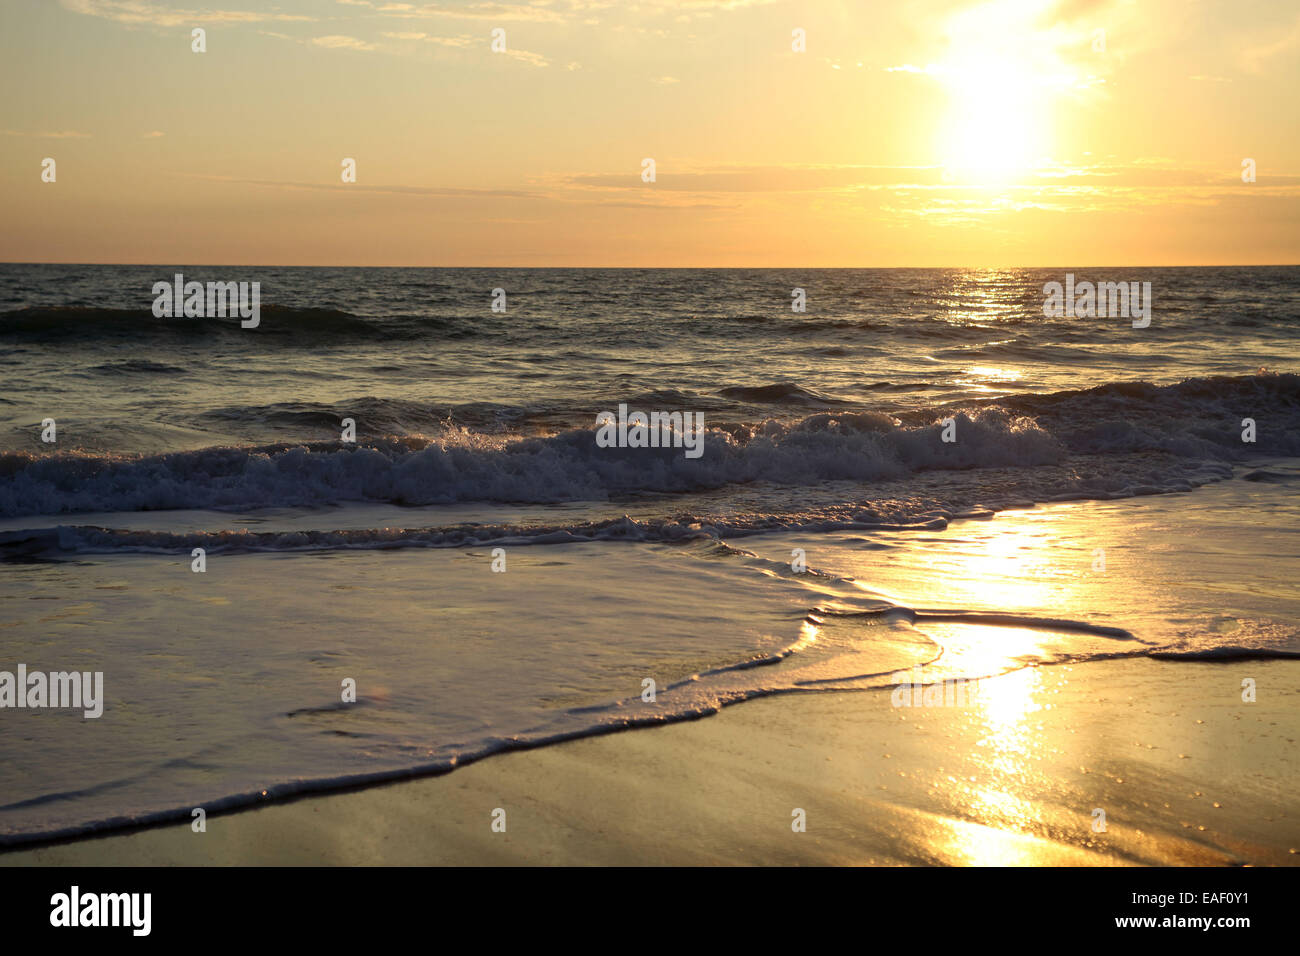 Sonnenuntergang in Palmar Beach, Caidz, Andalusien, Spanien, Sonnenuntergang in Palmar Beach, Caidz, Andalusien, Spanien, Strand, Playa, Sommer Sonnenuntergang, Stockfoto